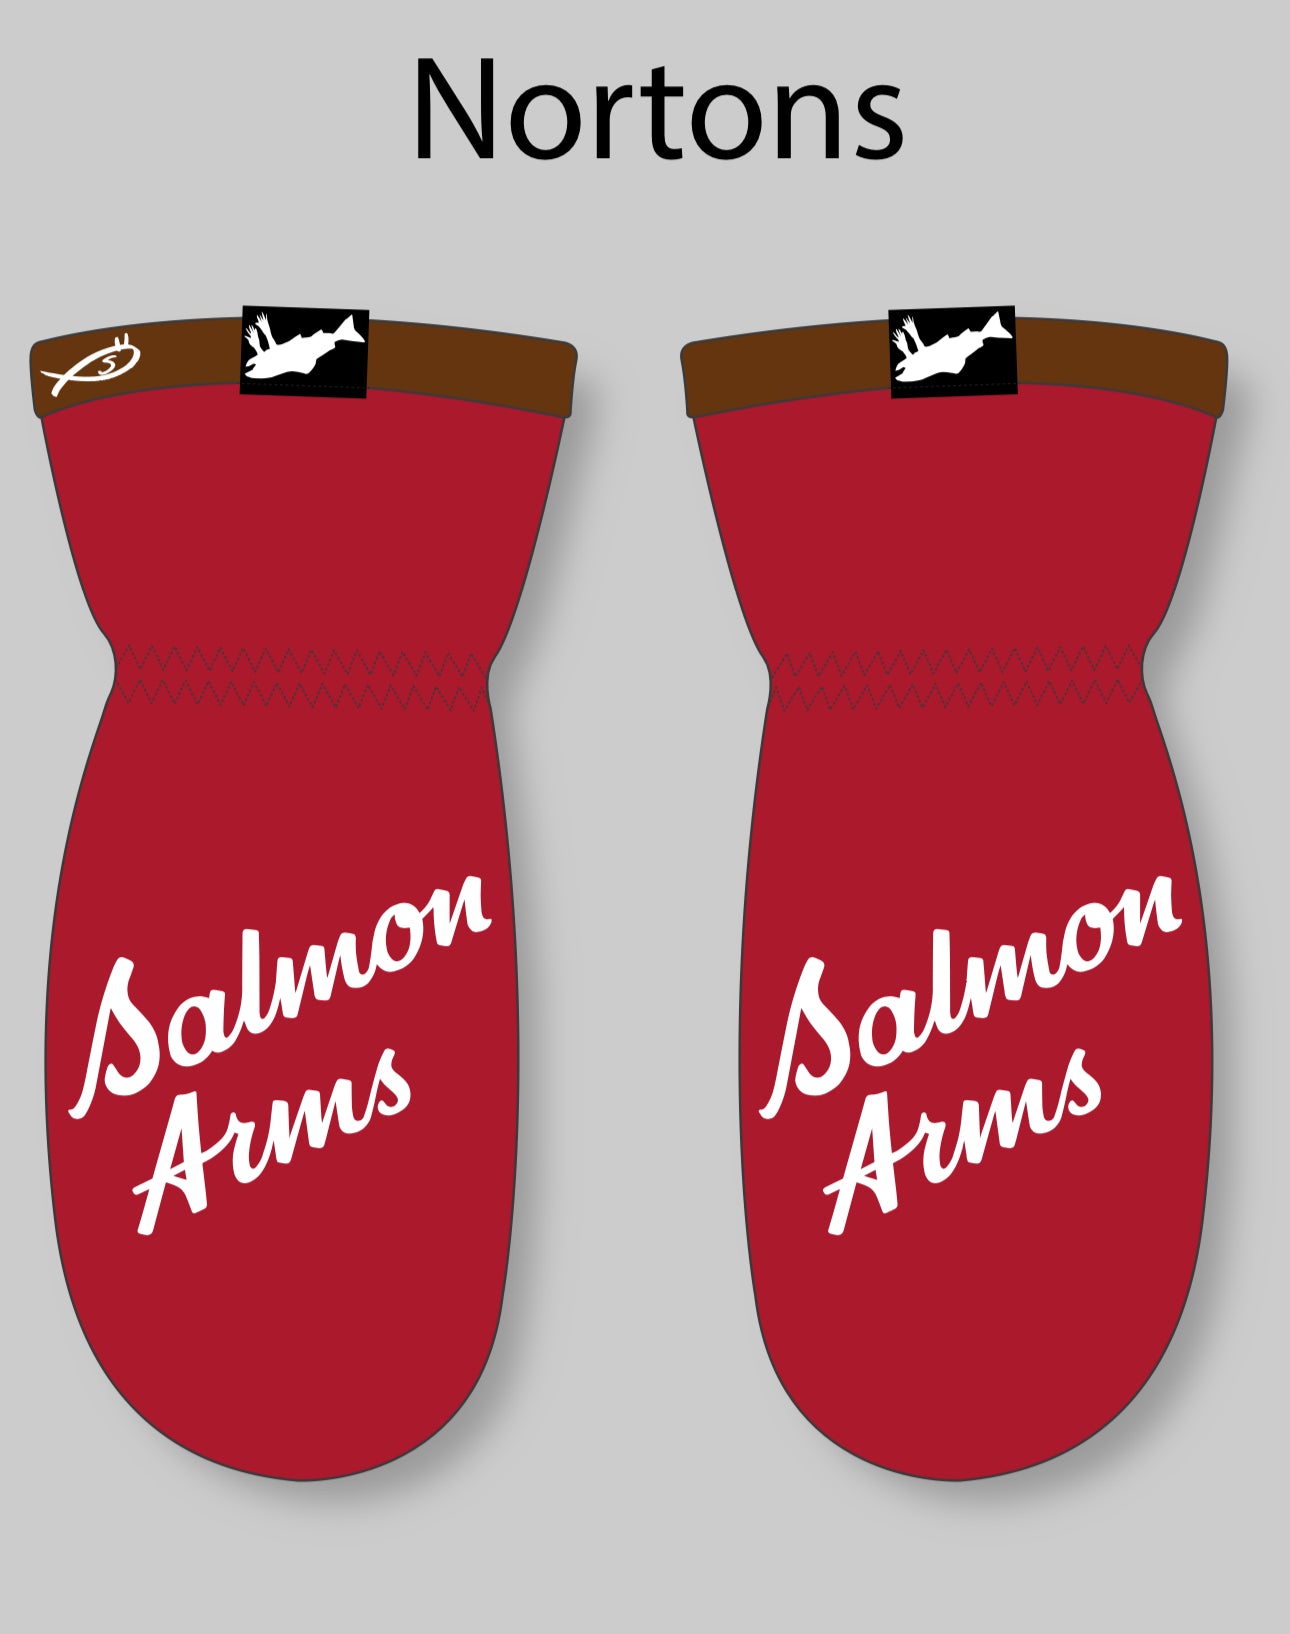 Salmon Arms - Team Mitts - Norton